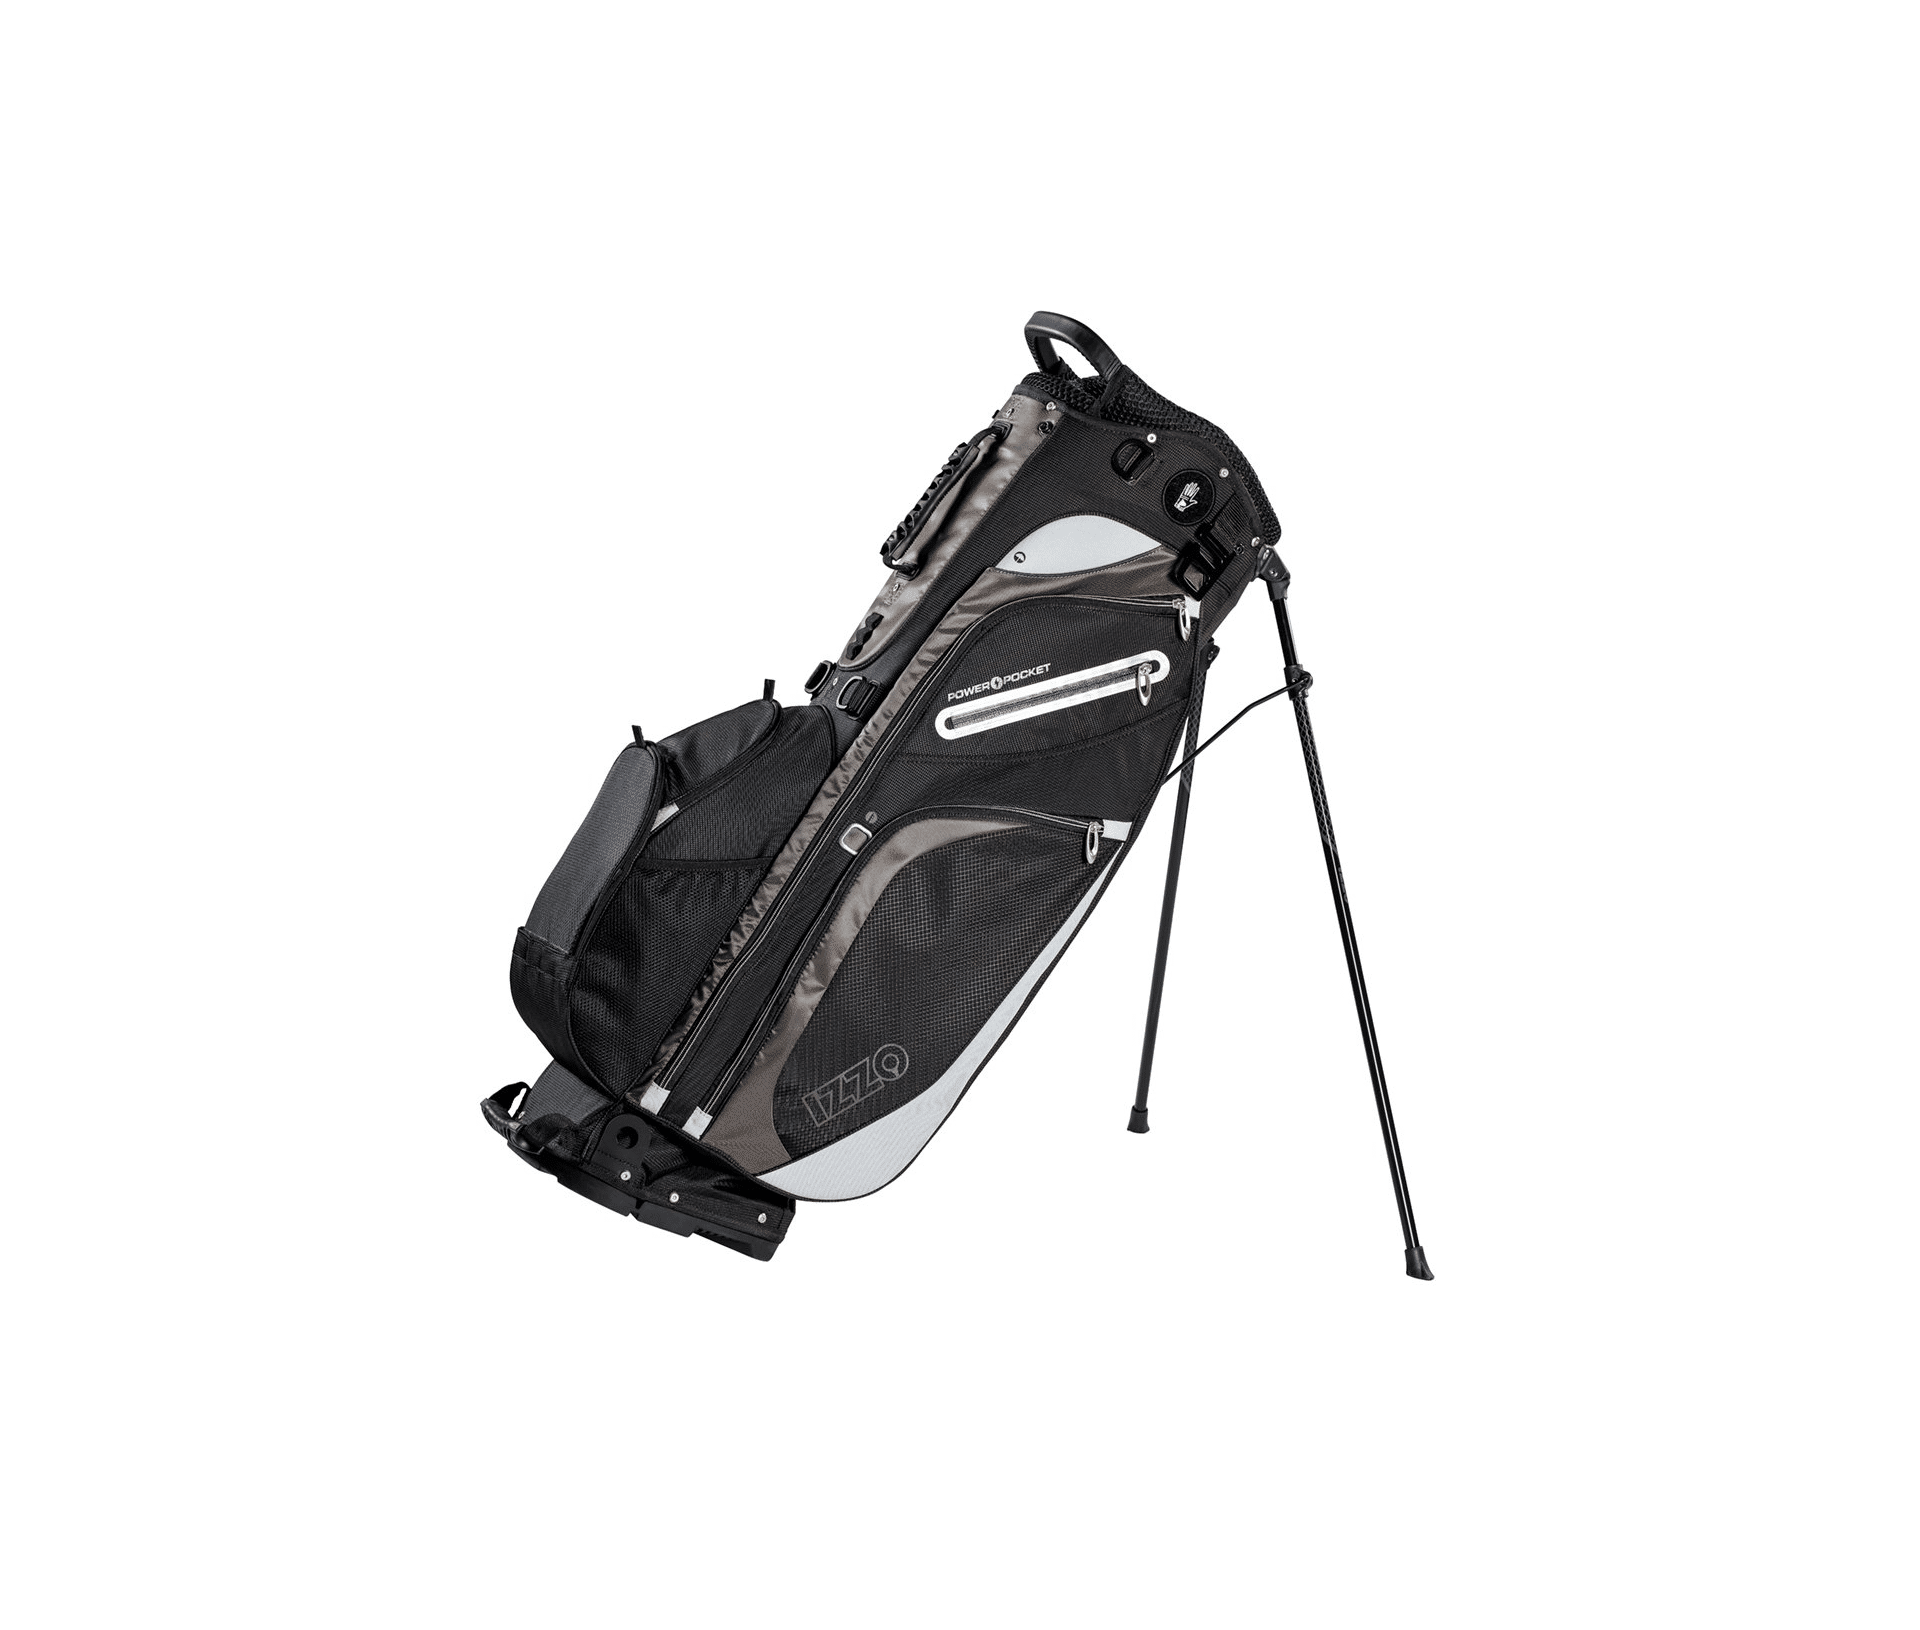 Izzo Golf Versa Hybrid Golf Bag